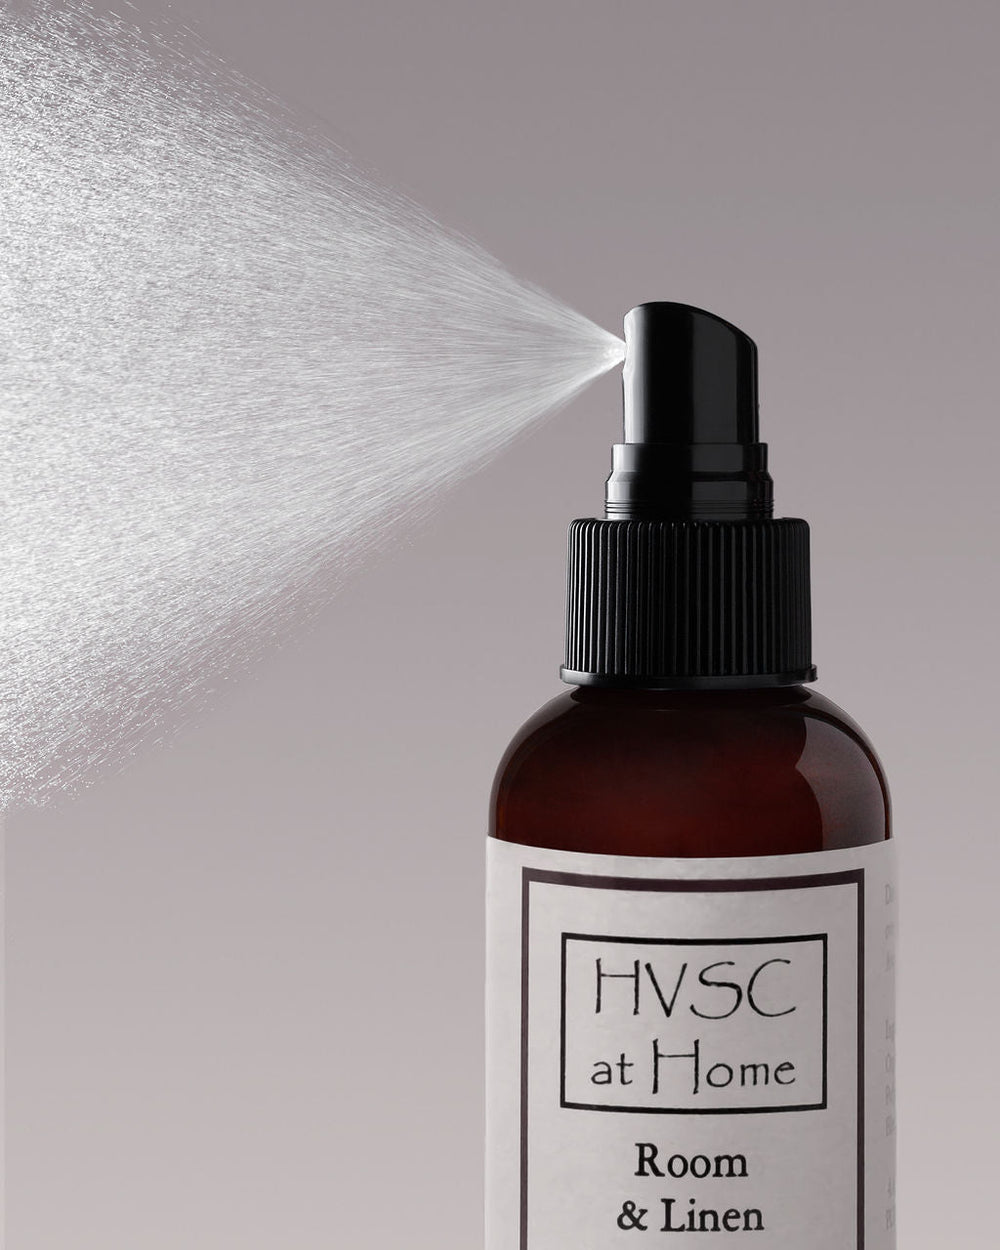 Cranberry Spice | Room & Linen Spray - Hudson Valley Skin Care